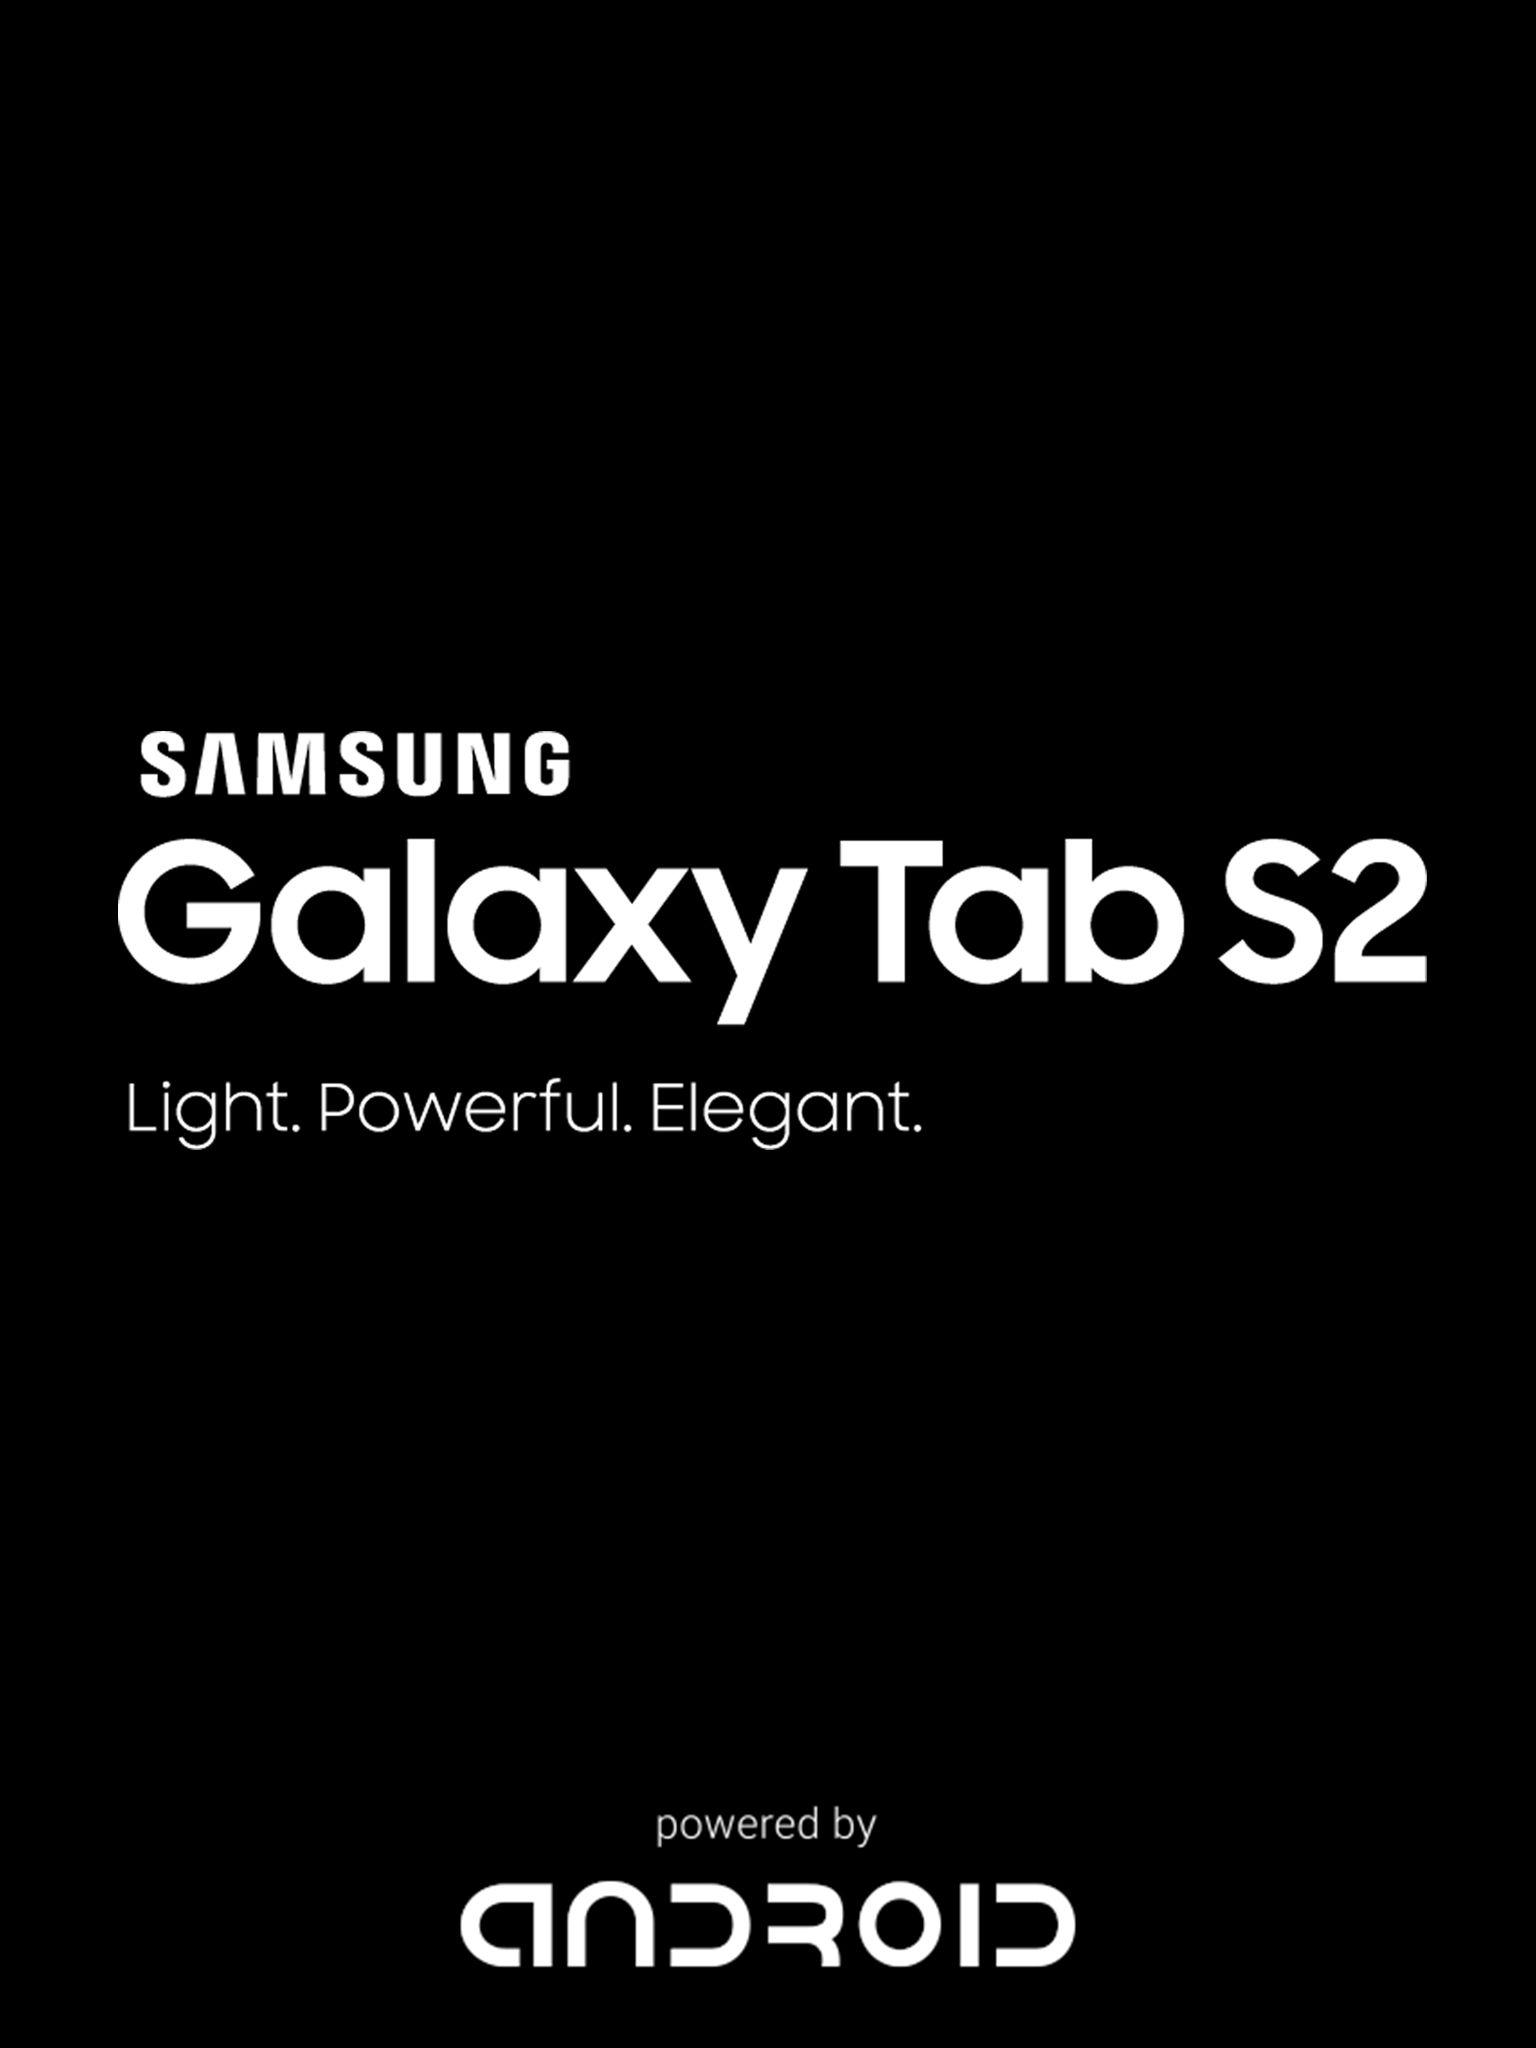 Samsung Android Logo - Boot screen customization